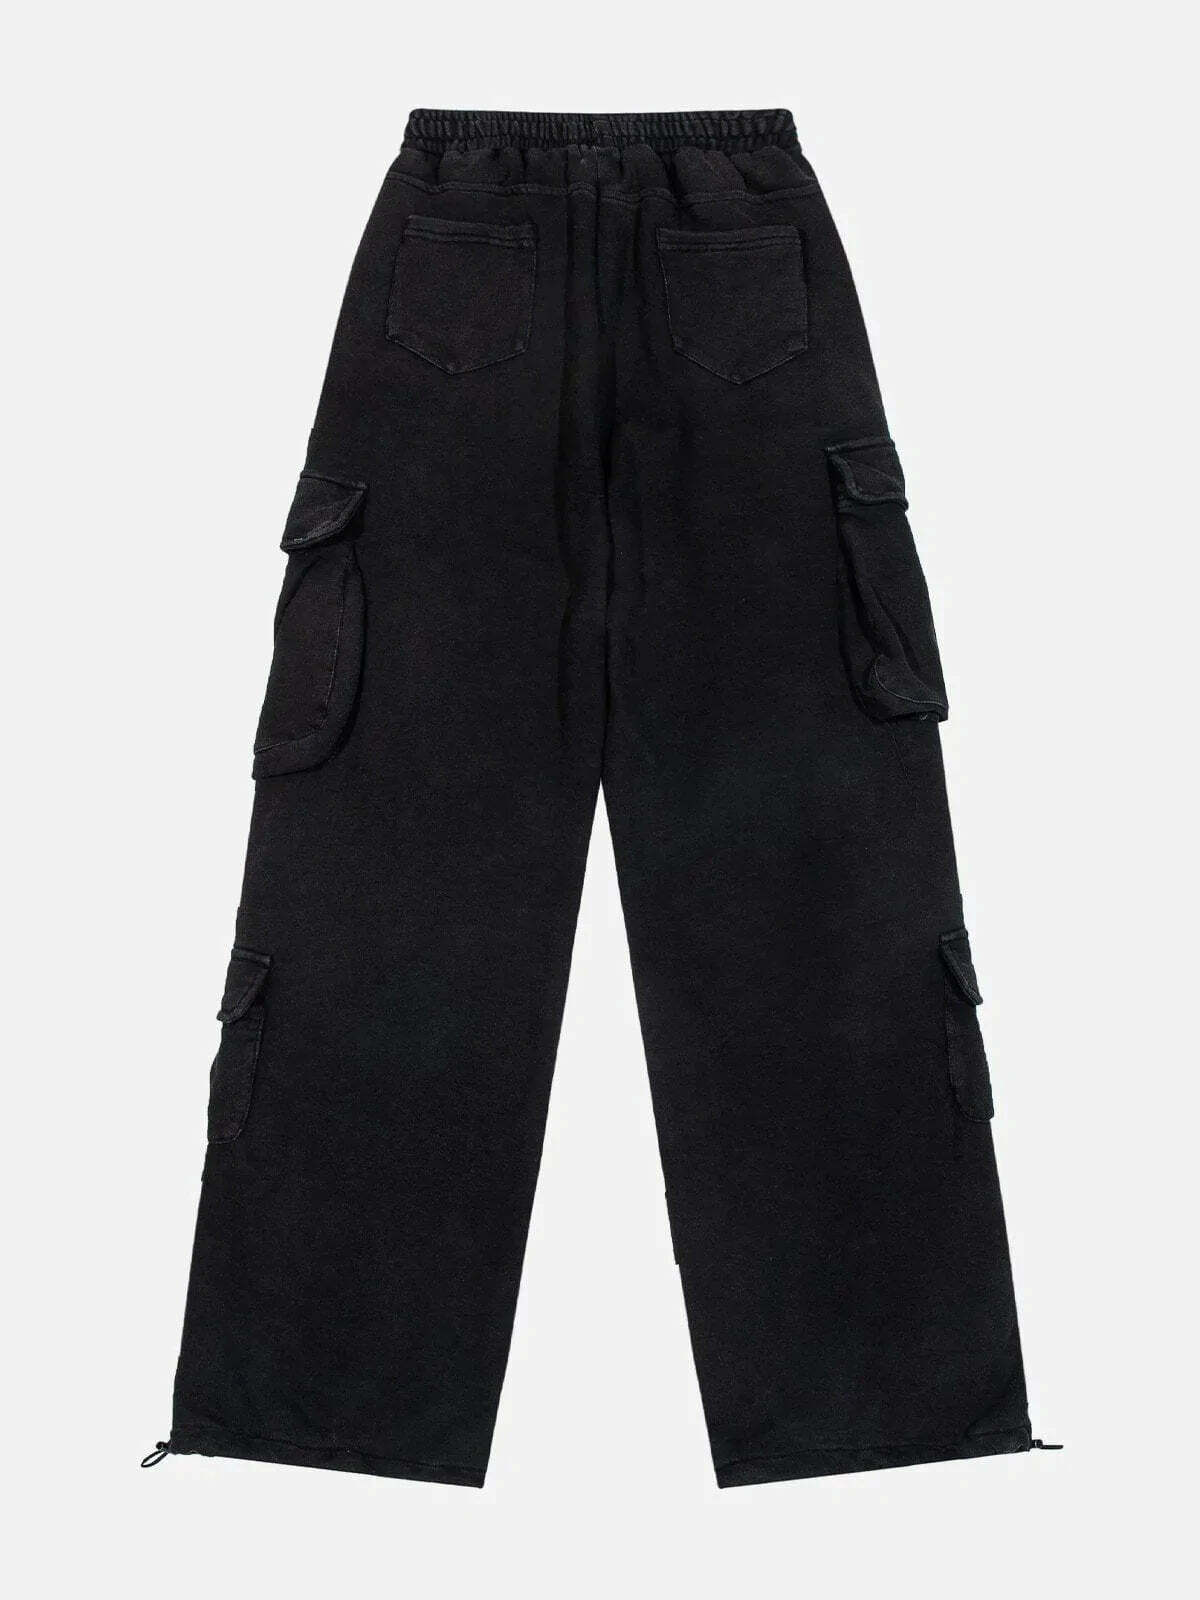 multipocket drawstring pants functional & edgy streetwear 8012